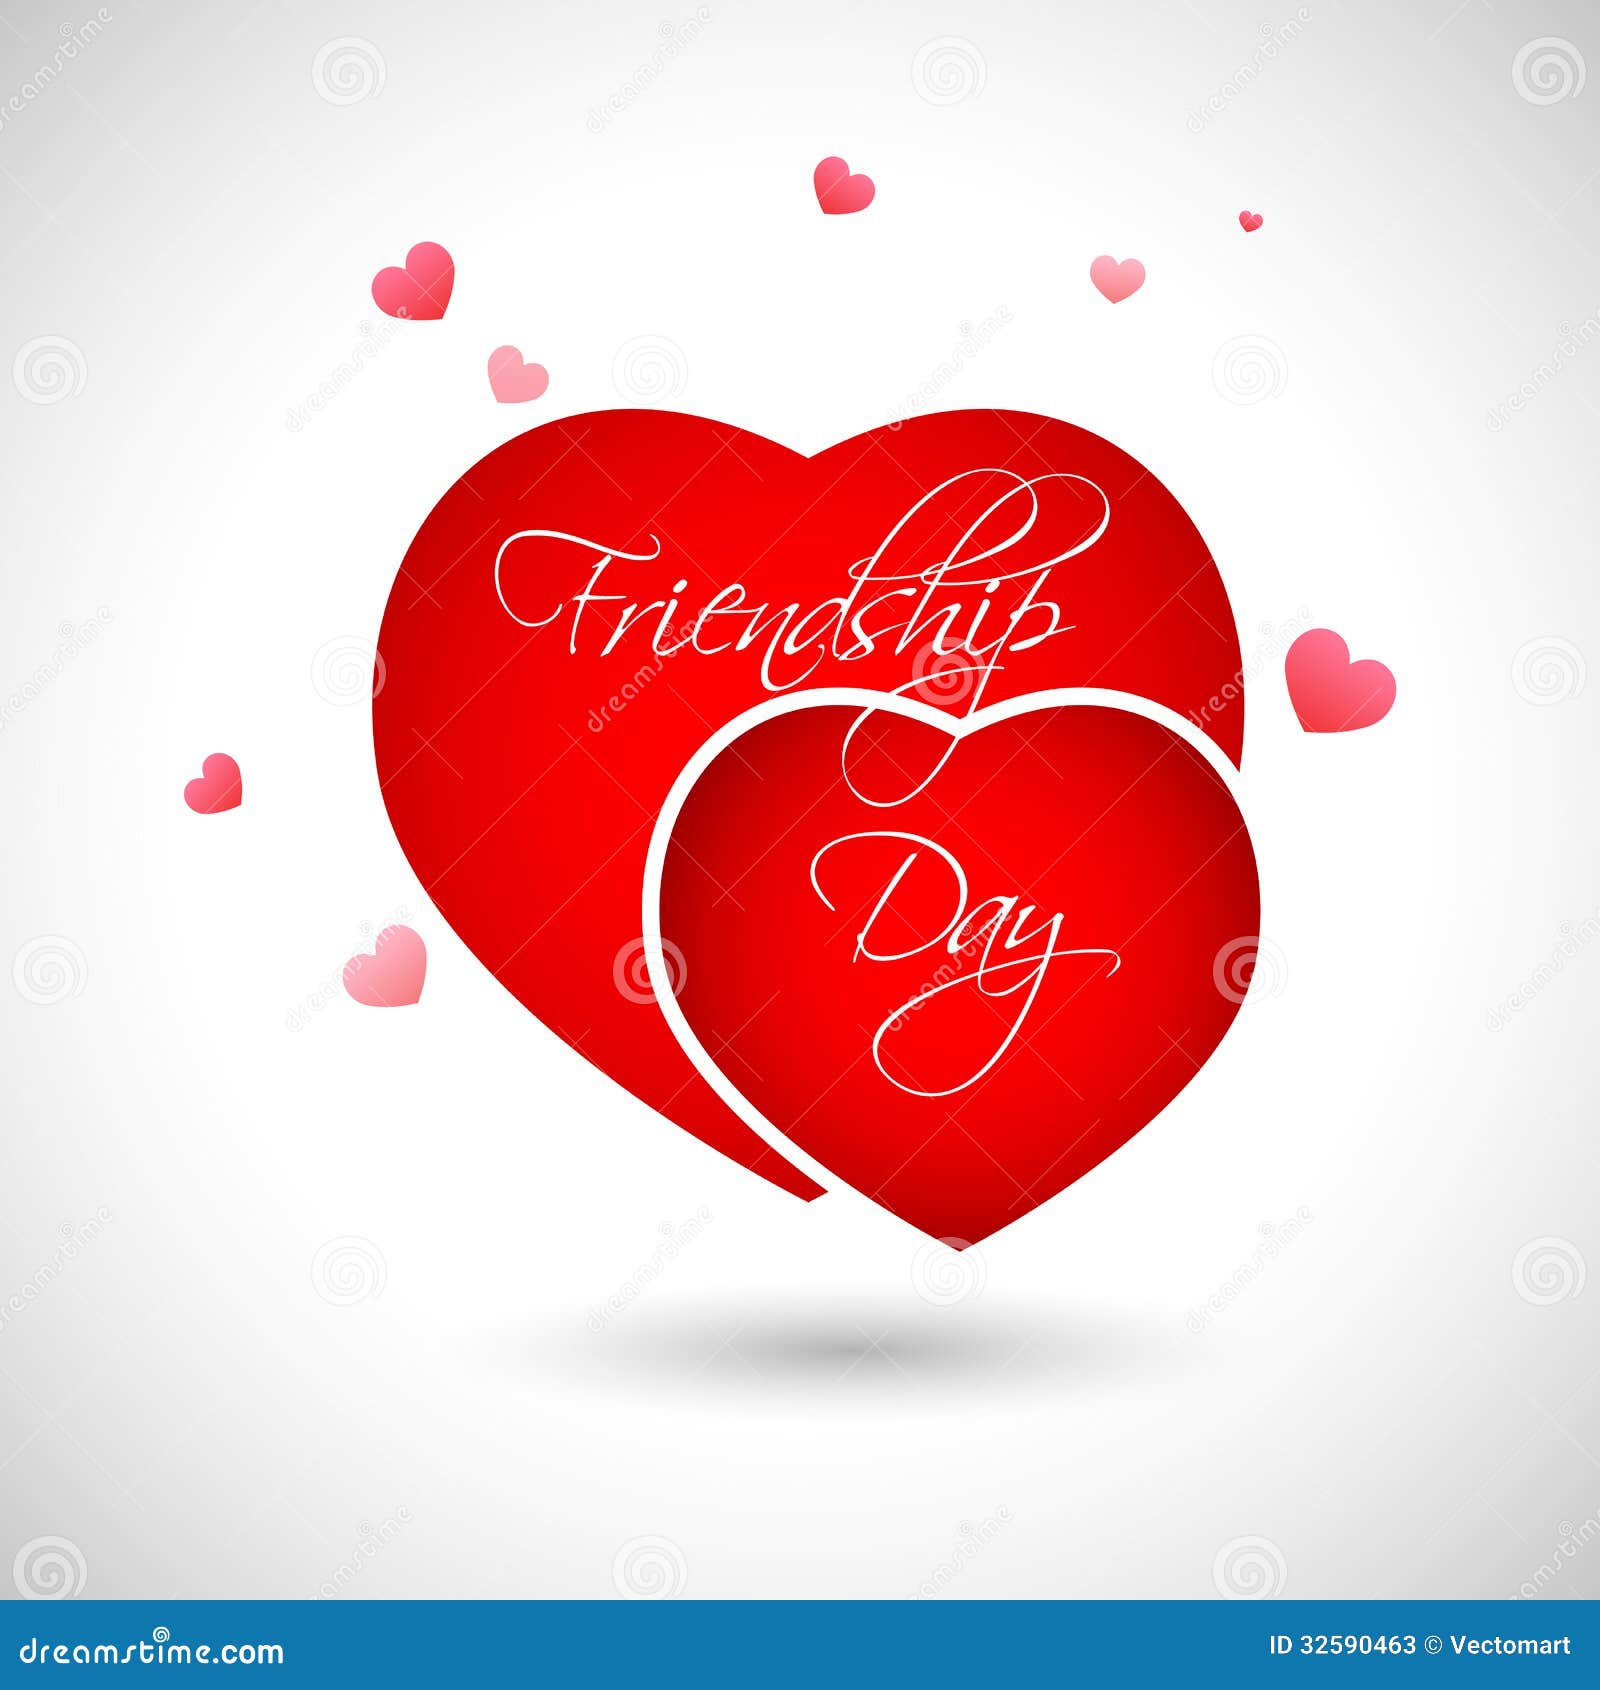 Happy Friendship Day Stock Photos Image 32590463